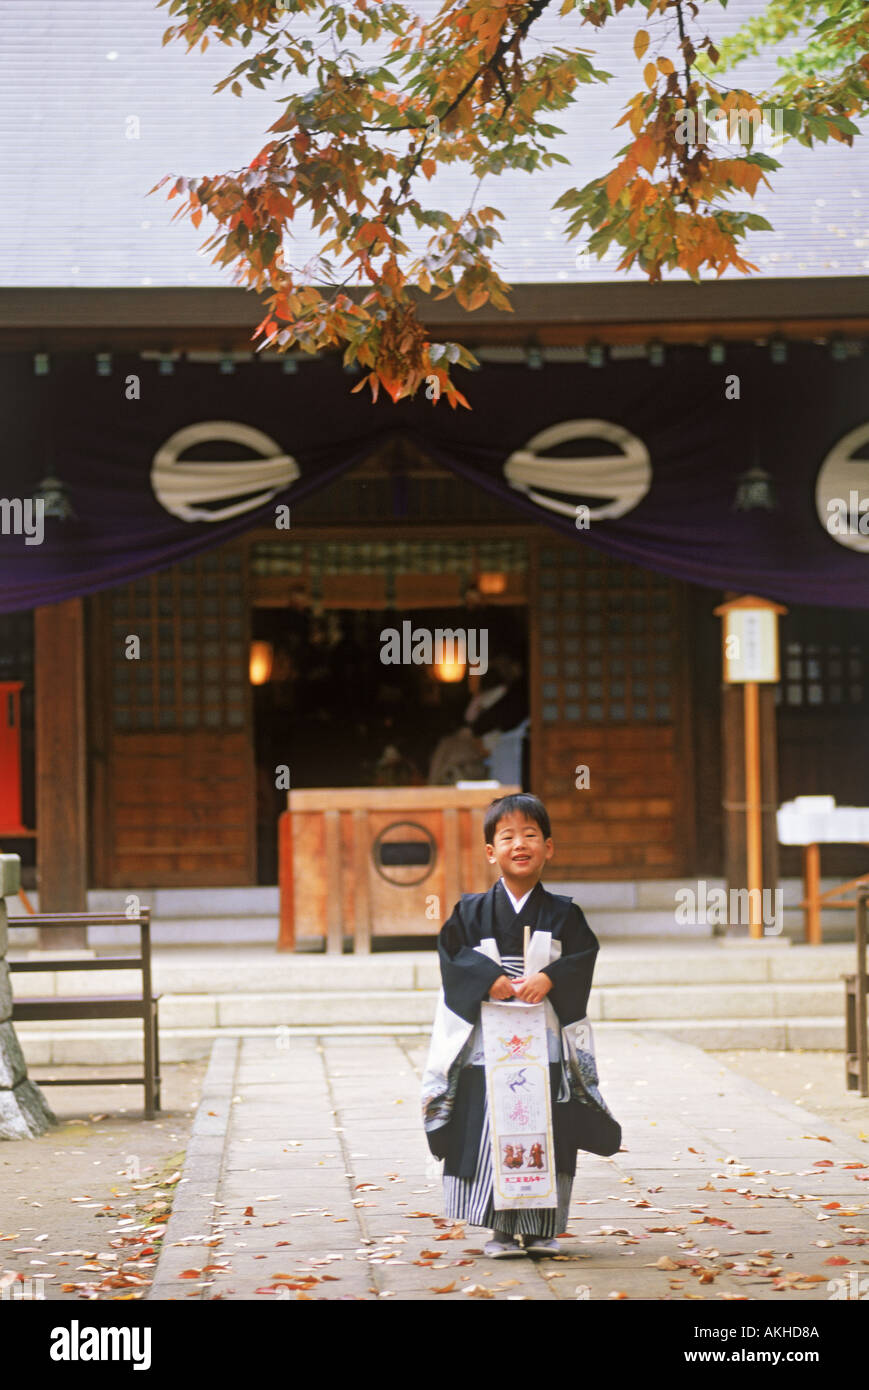 Japanese boy in kimono during November children's festival Stock Photo